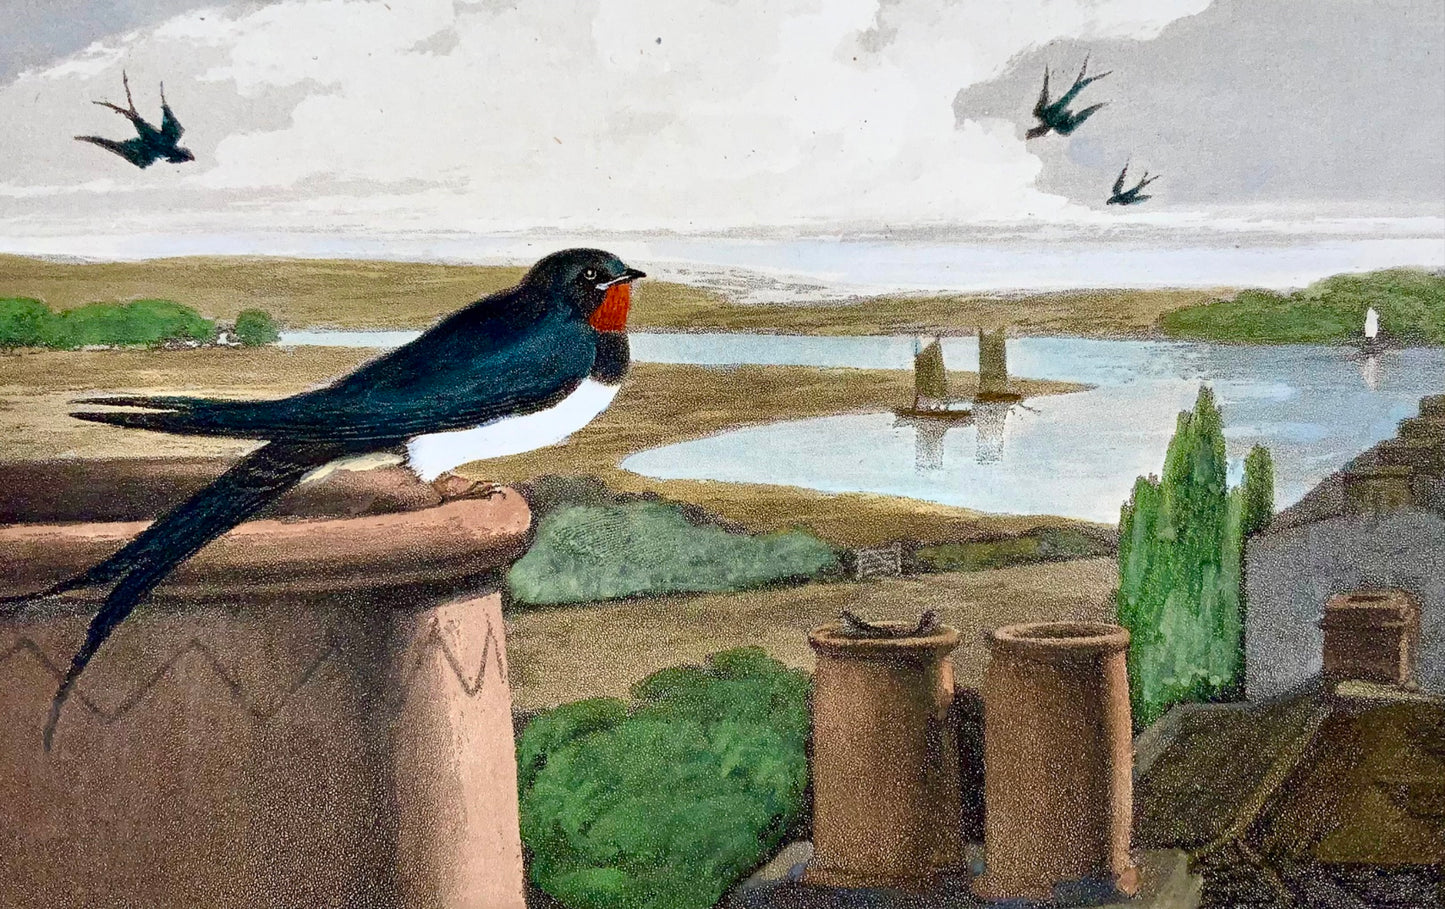 1807 William Daniell, Swallow, ornithology, hand coloured aquatint